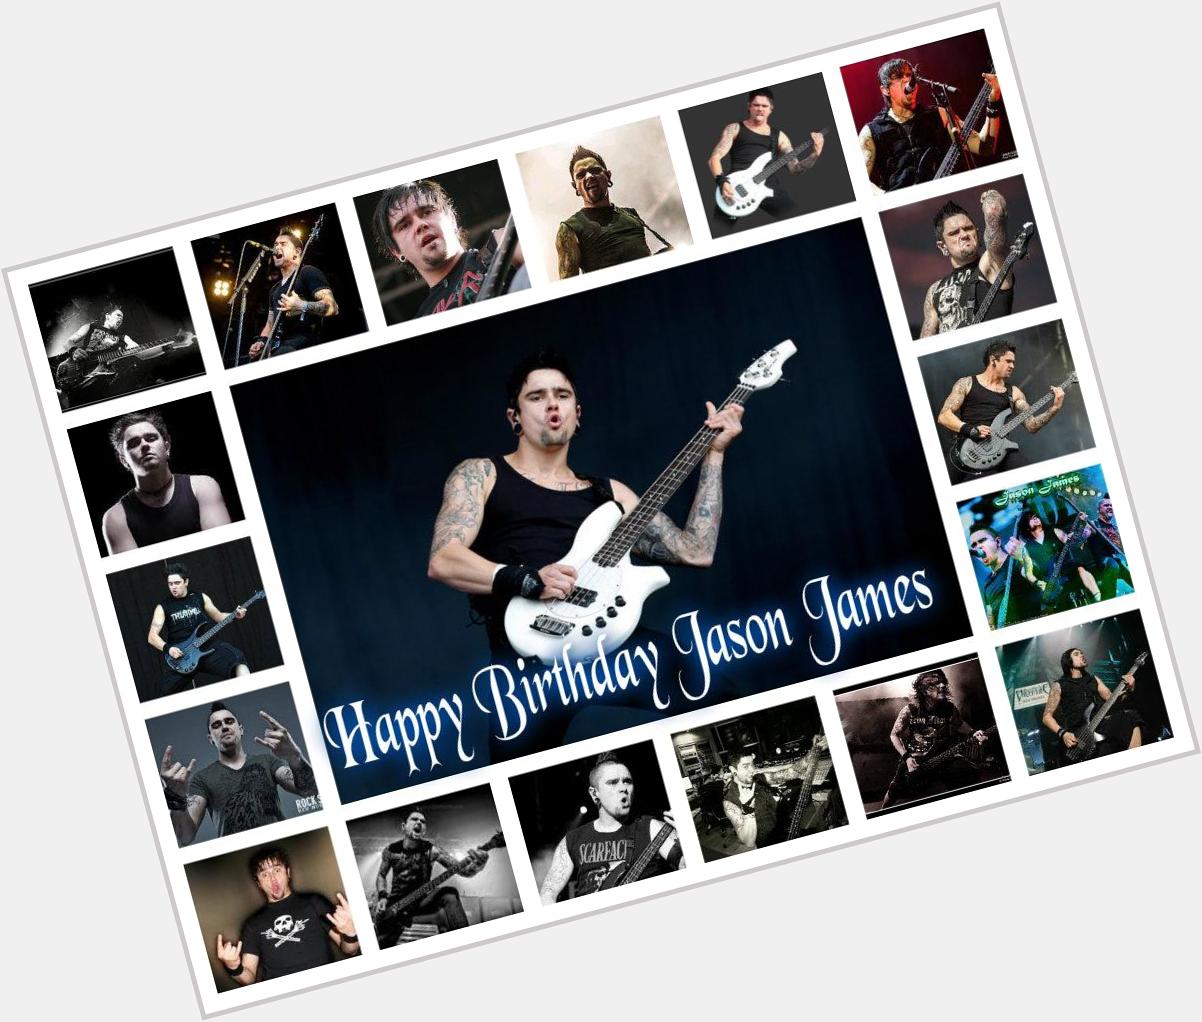 Happy Birthday Jason James 